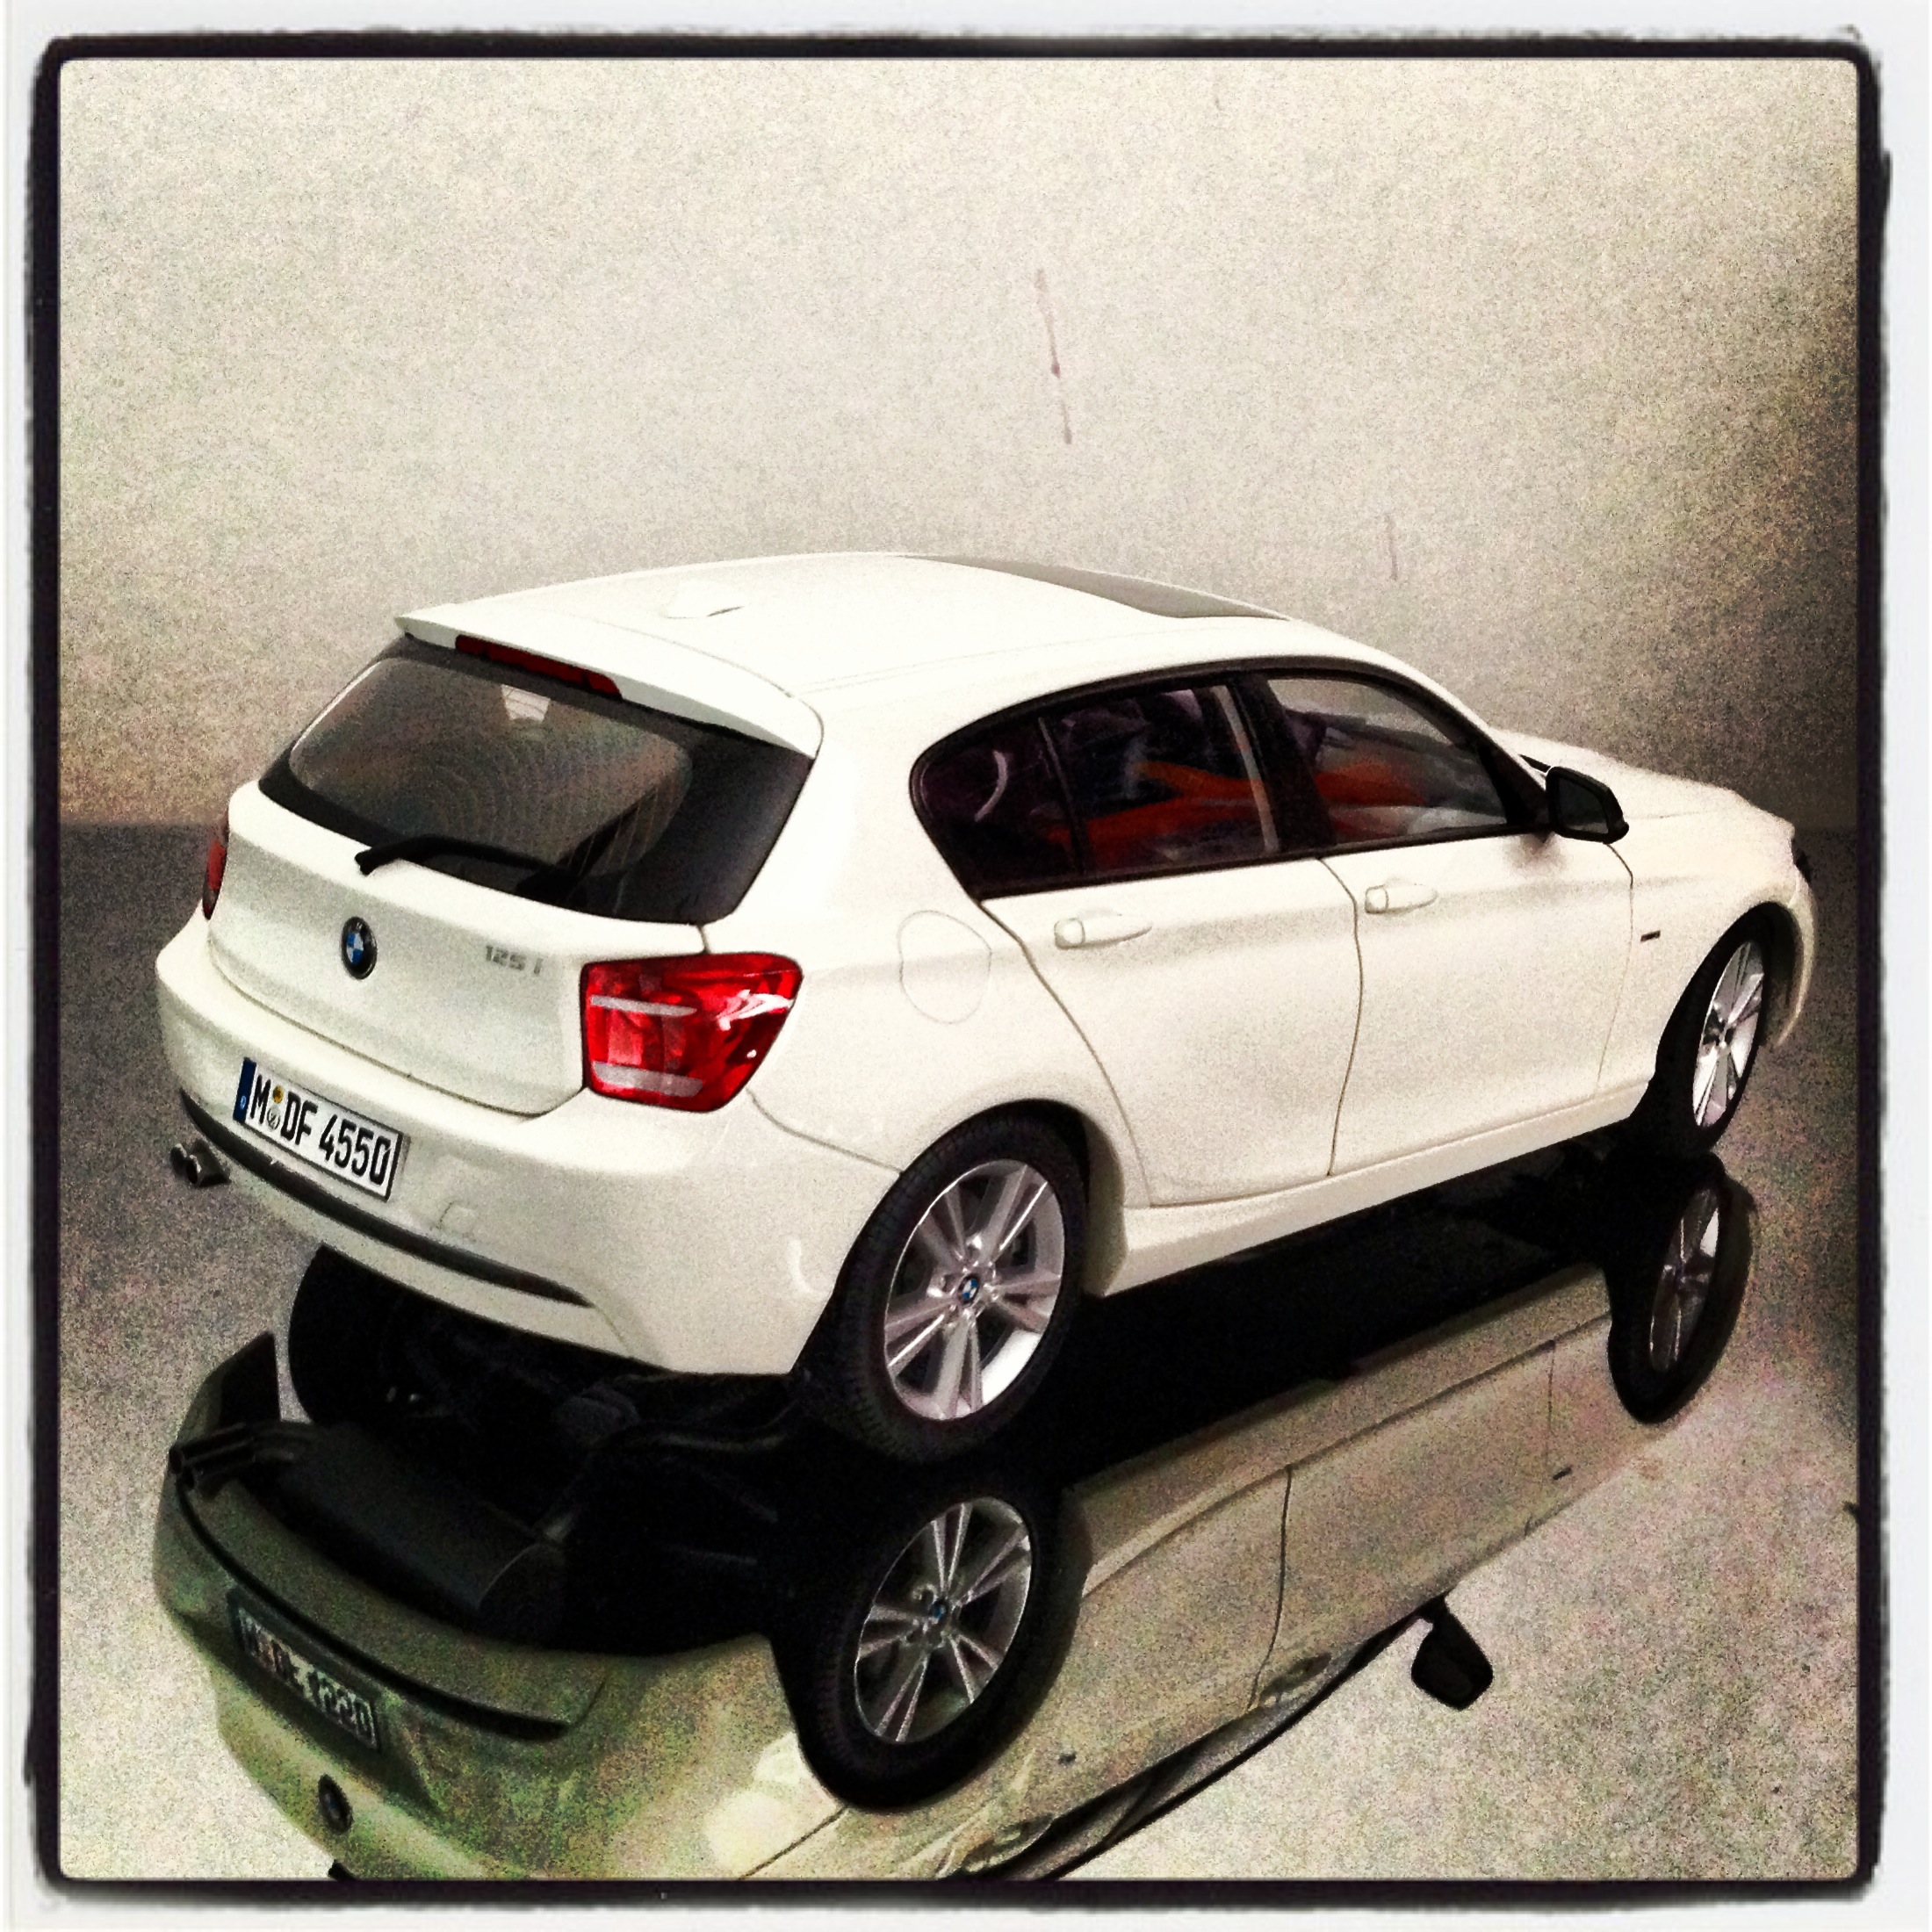 BMW 1 series (F20) 5 doors, alpine white (paragon)